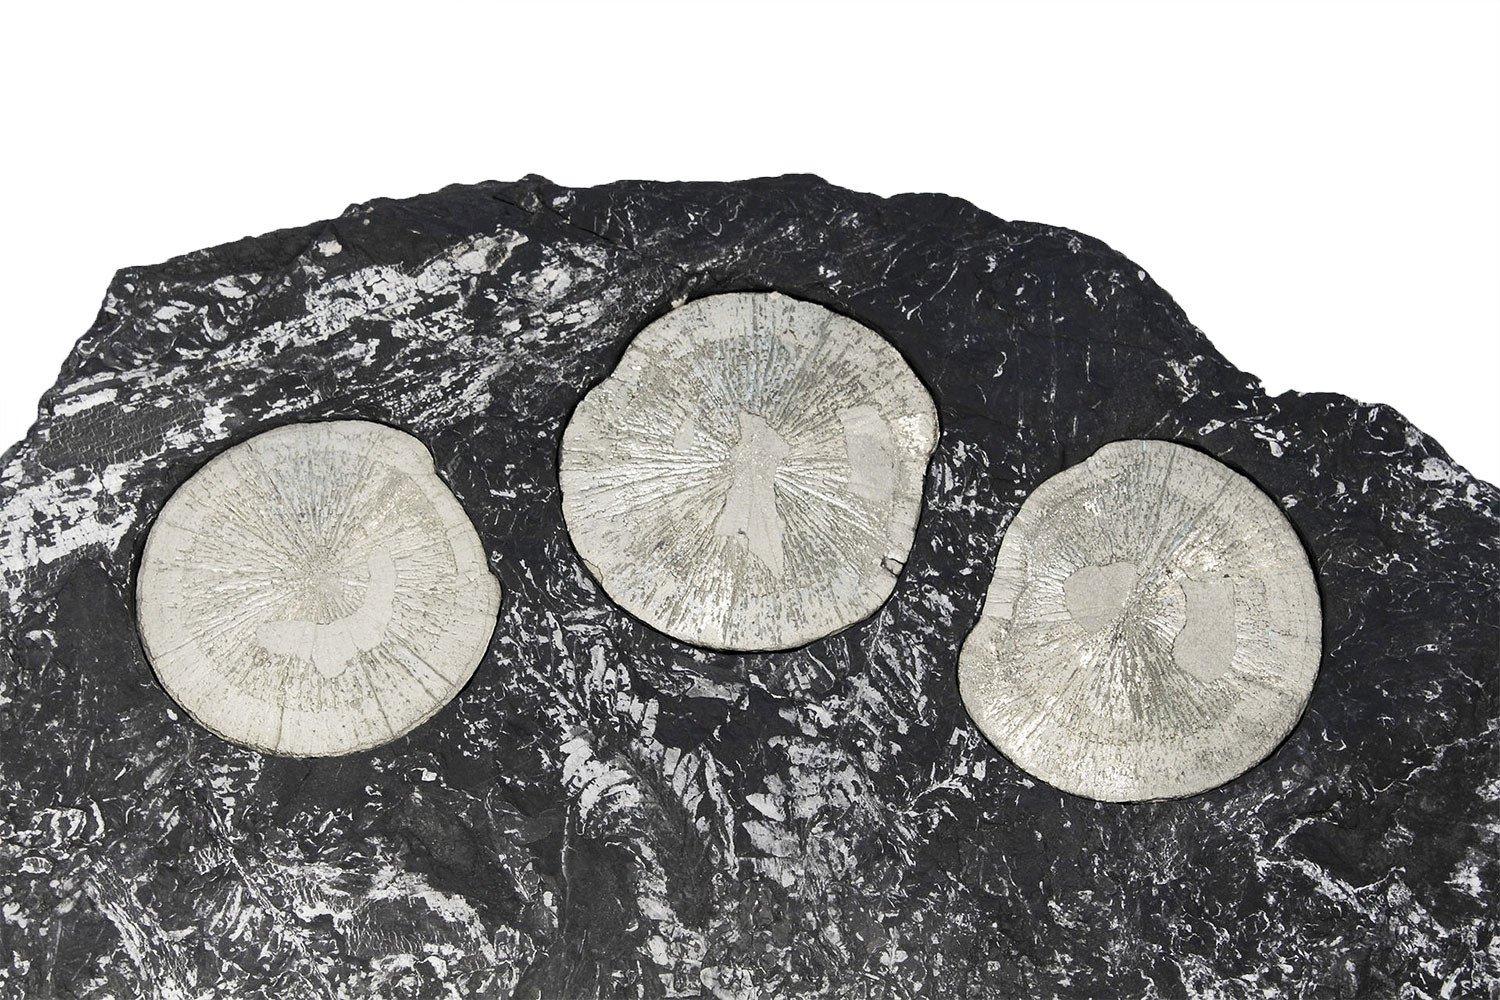 Organic Modern Pyrite Suns with White Fossil Ferns in a Black Slate Matrix